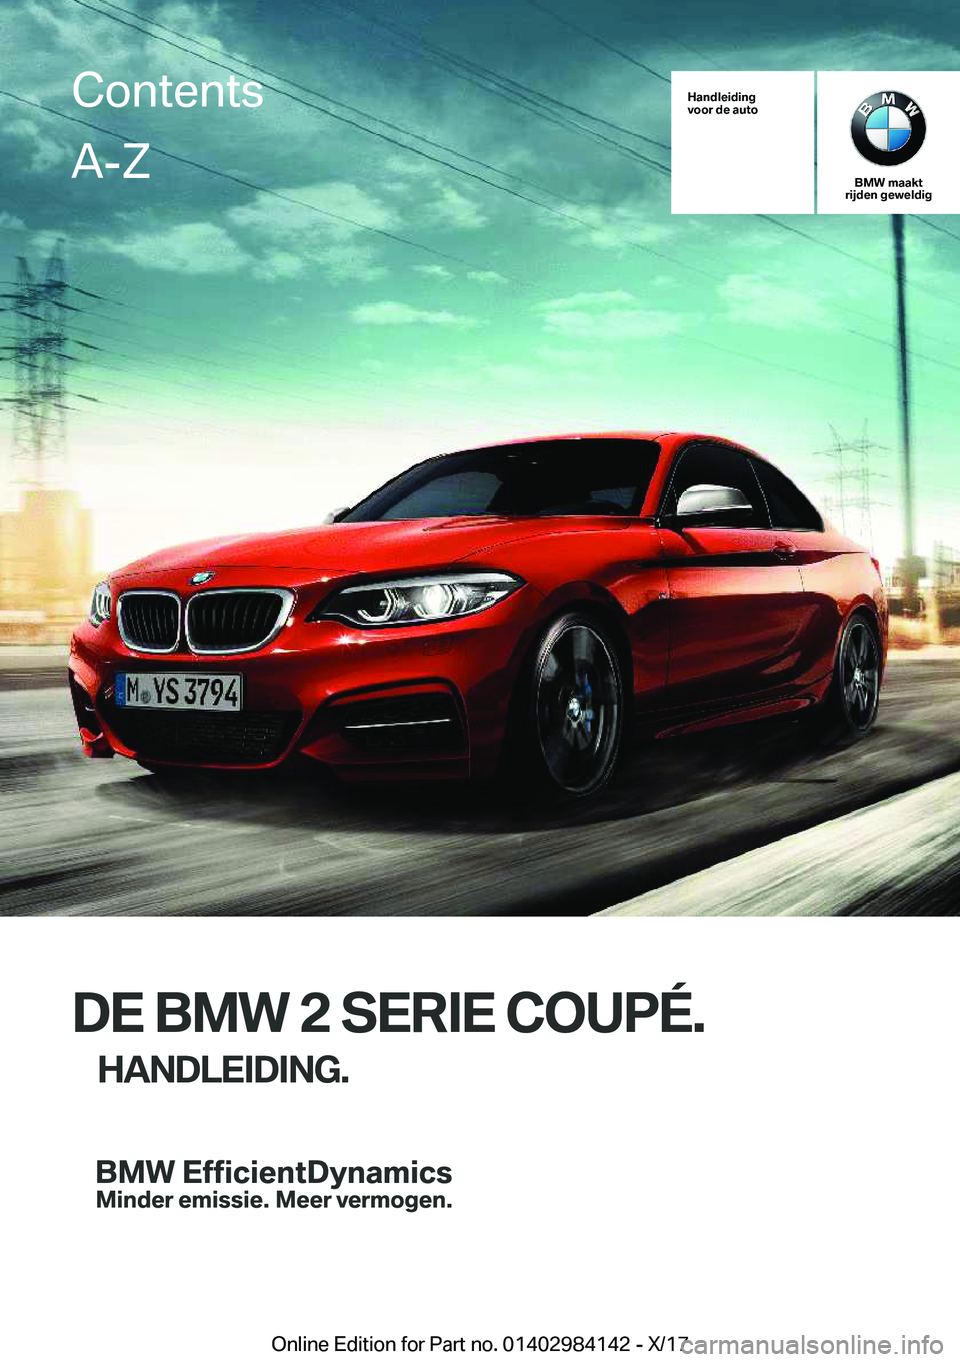 BMW 2 SERIES COUPE 2018  Instructieboekjes (in Dutch) �H�a�n�d�l�e�i�d�i�n�g
�v�o�o�r��d�e��a�u�t�o
�B�M�W��m�a�a�k�t
�r�i�j�d�e�n��g�e�w�e�l�d�i�g
�D�E��B�M�W��2��S�E�R�I�E��C�O�U�P�